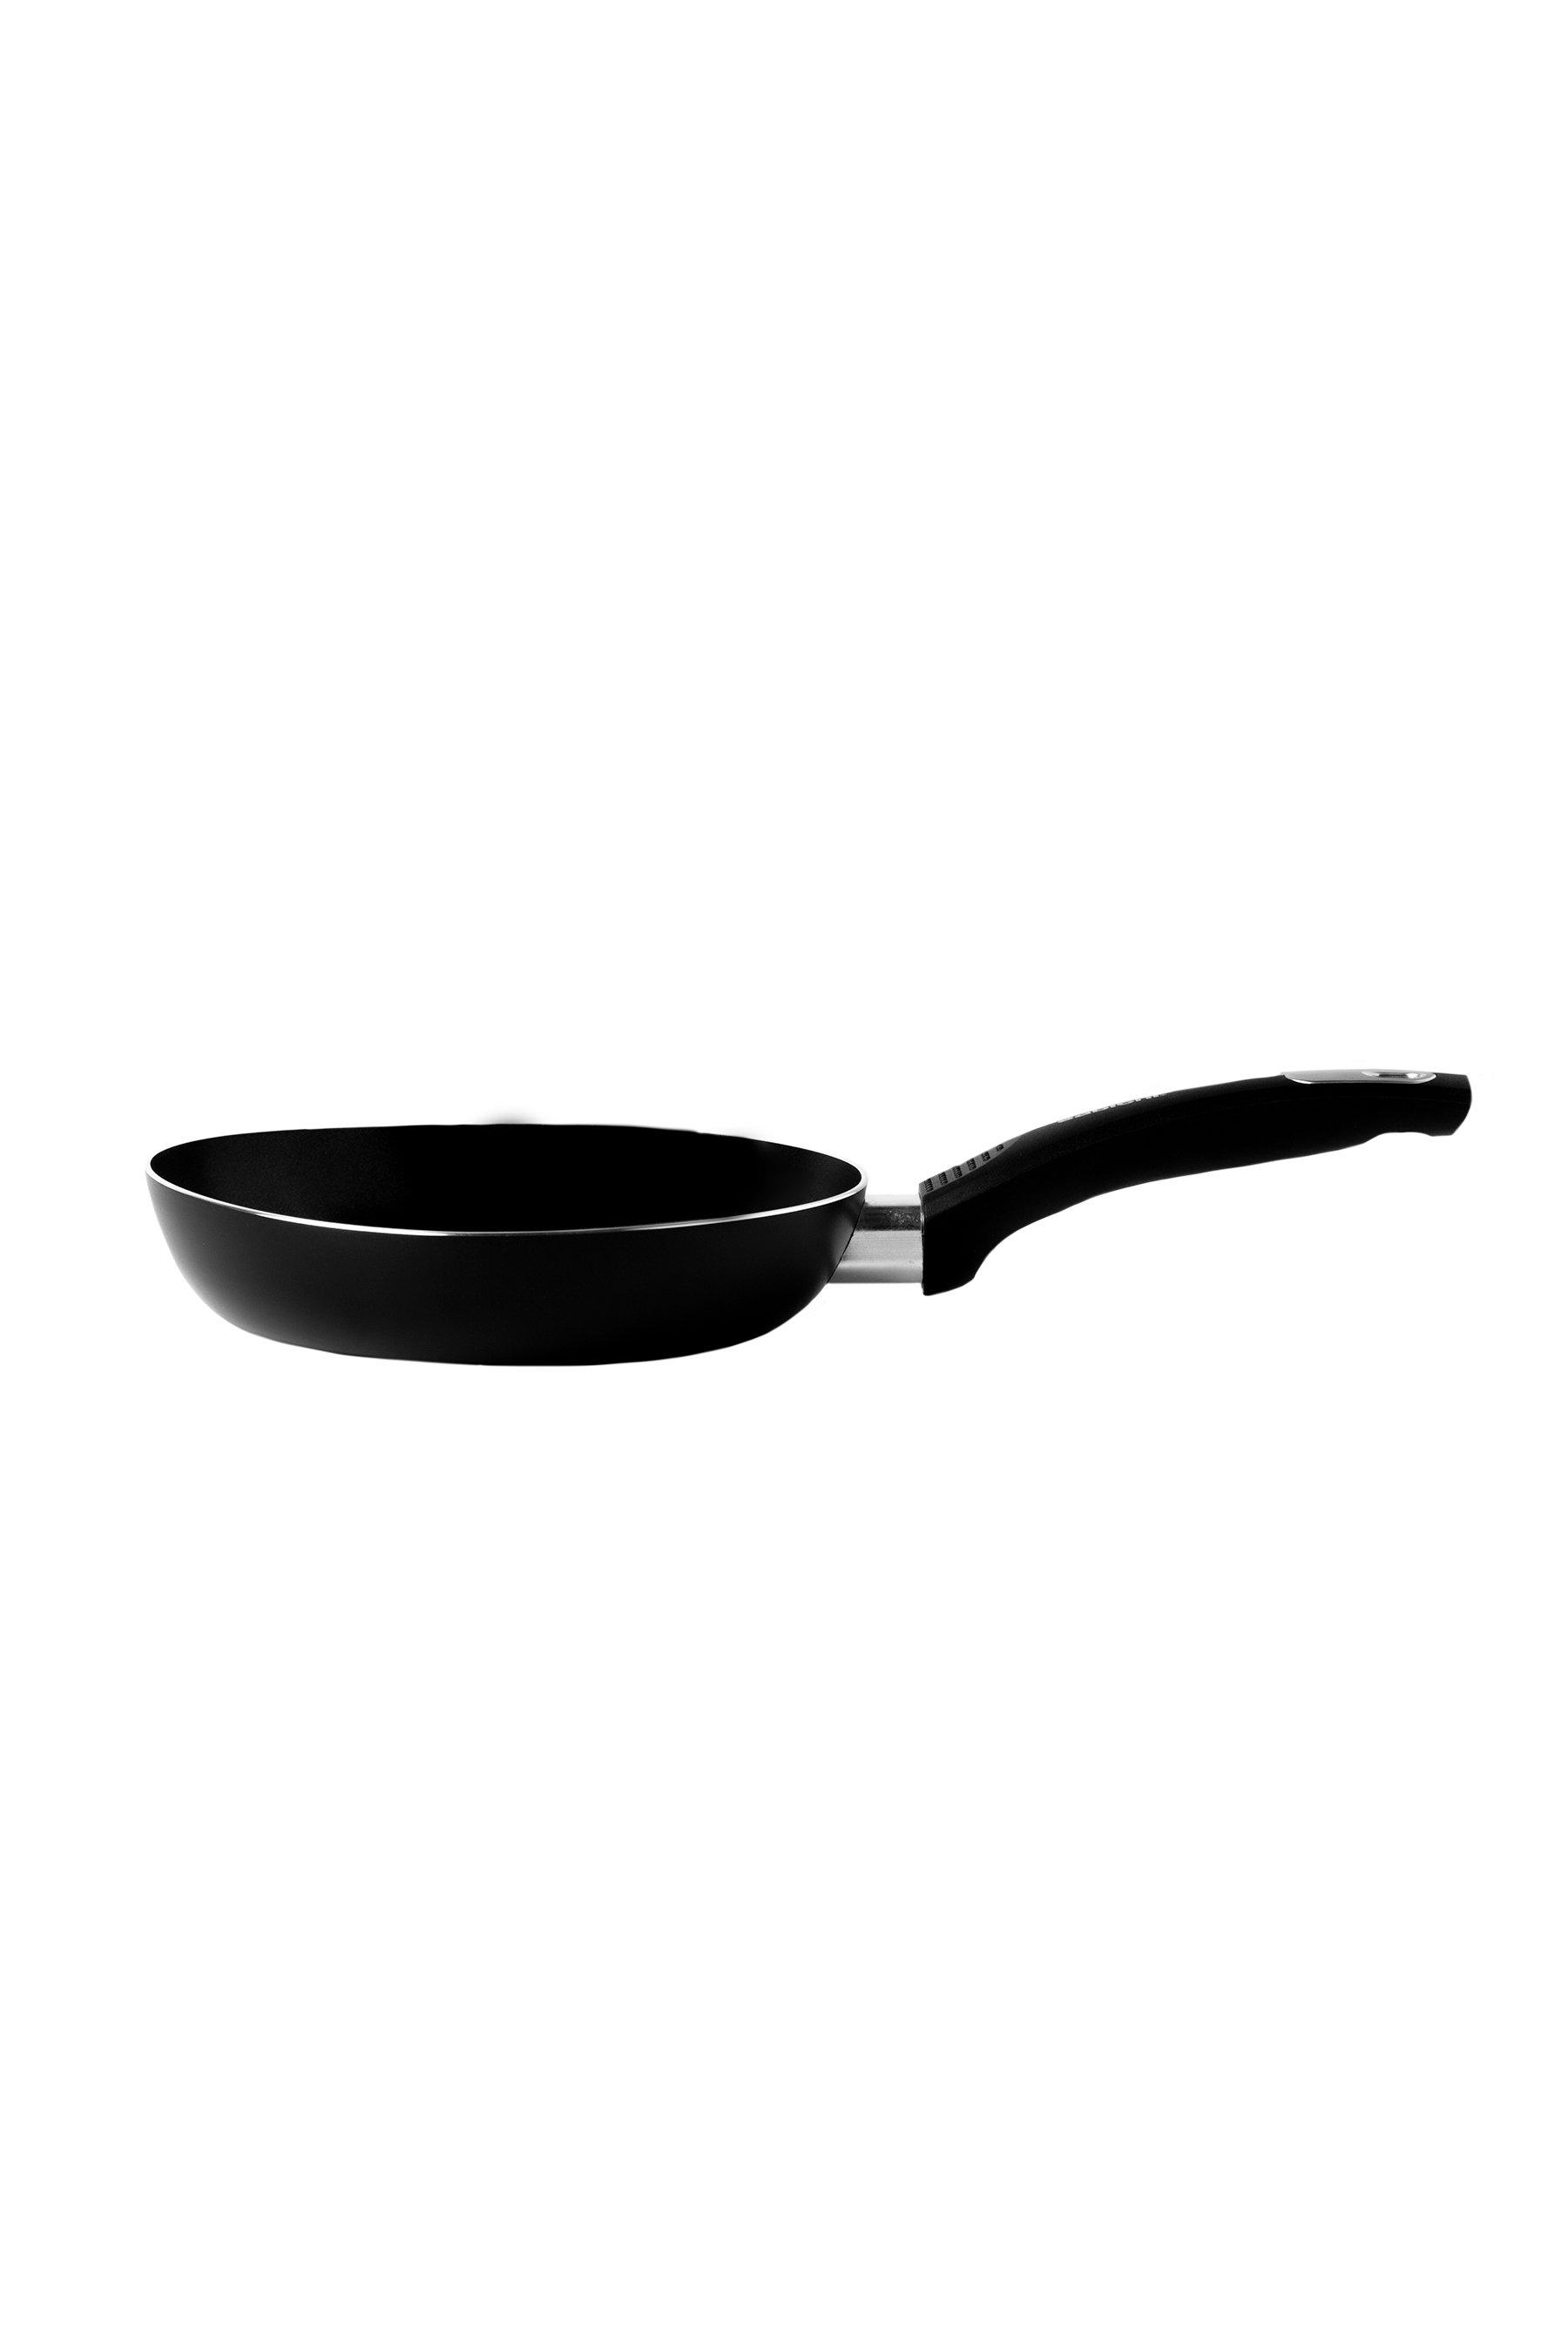 sabichi aluminium non stick frying pan - size: 20cm - black